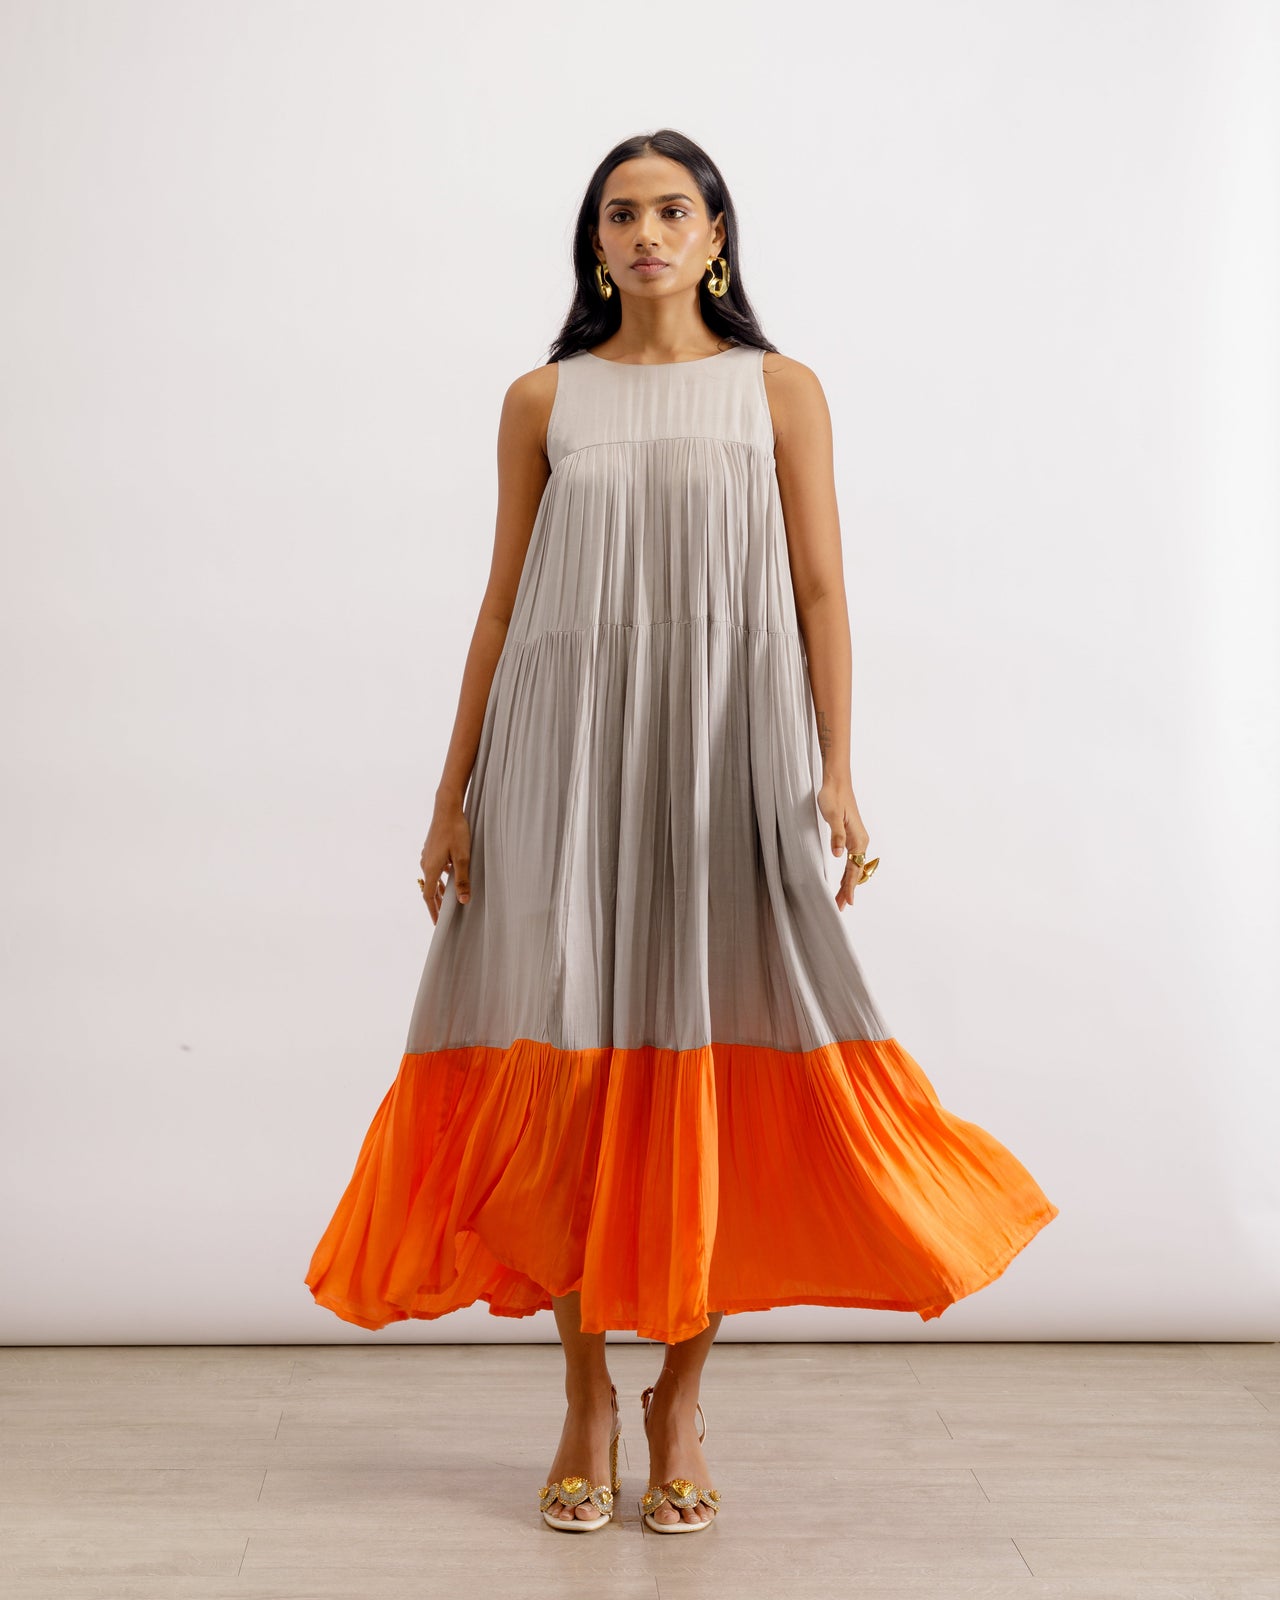 Sleeveless Halter Neck Dress | Halter Neck Dress Gray & Orange | PAIVE